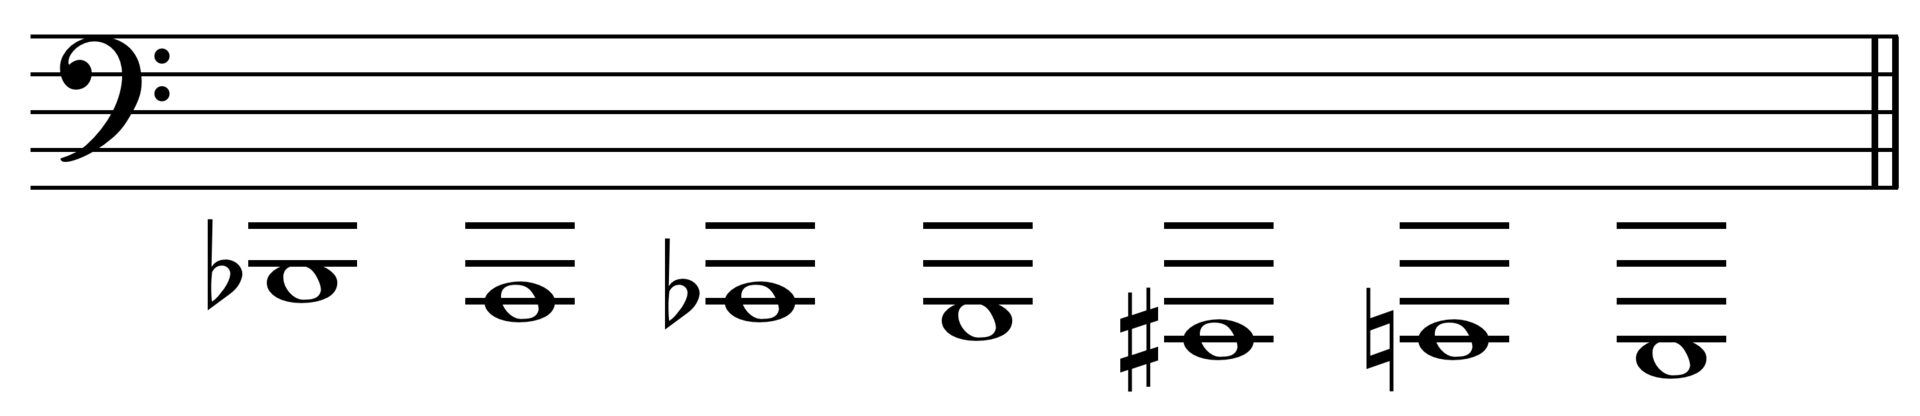 b flat scale trombone